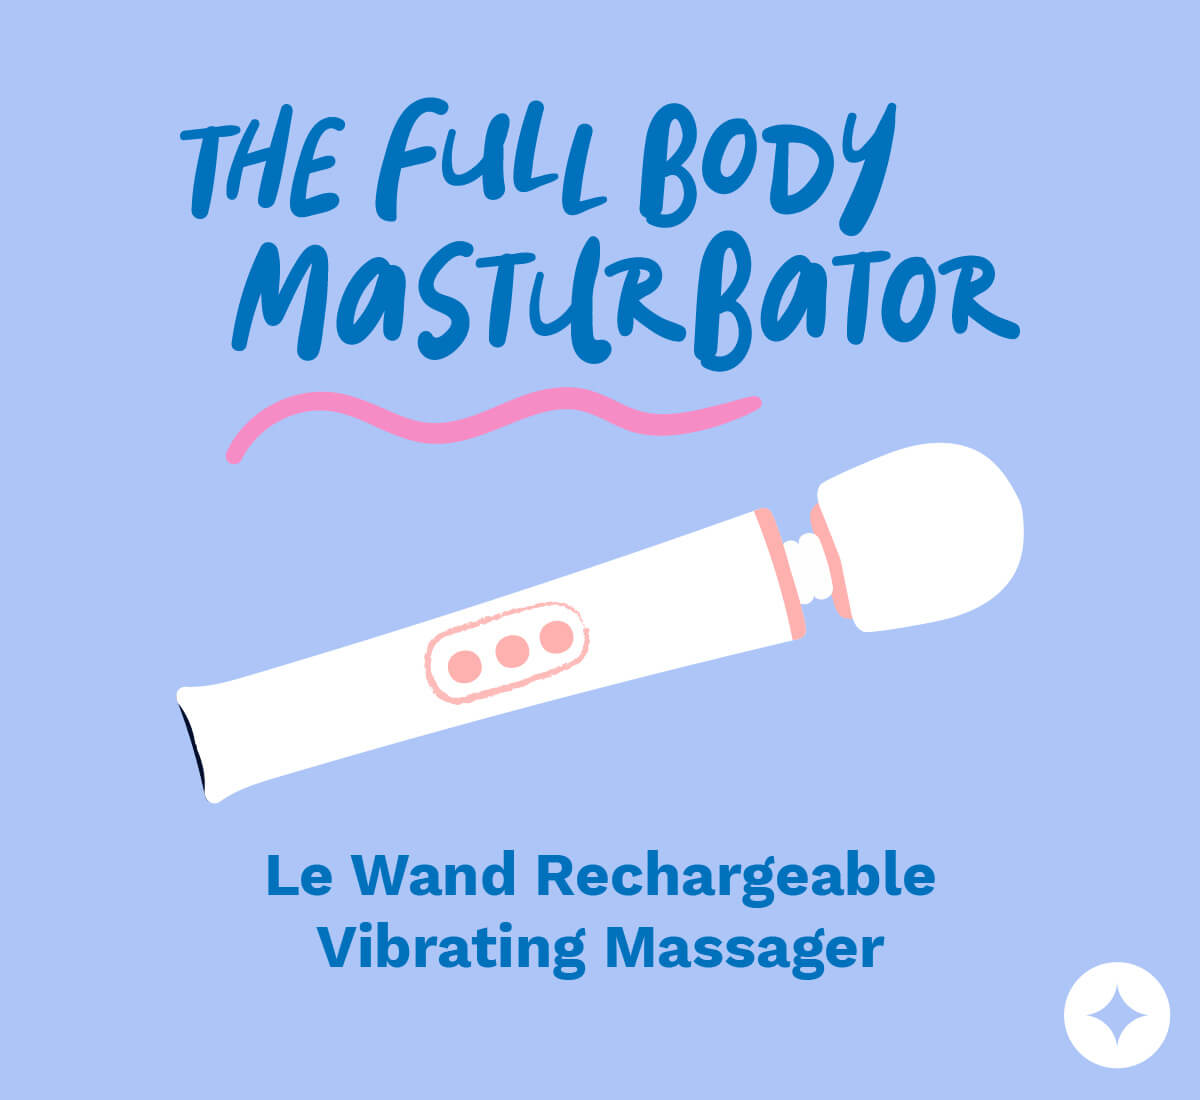 The Full Body Masturbator AKA Le Wand Rechargeable Vibrating Massager